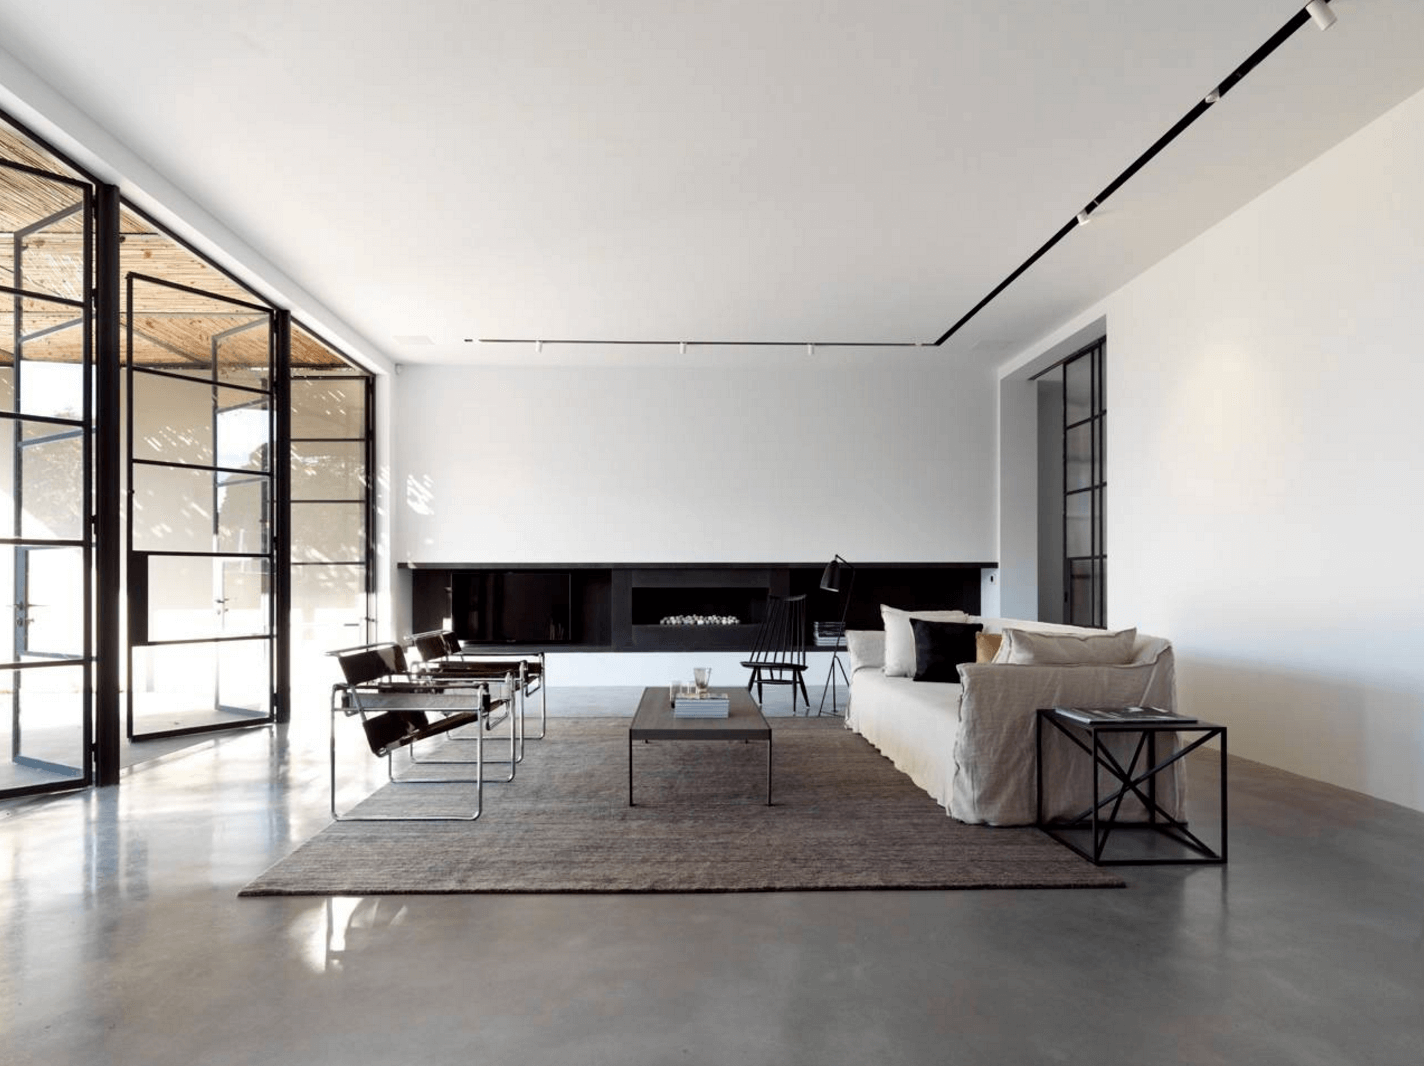 The Popularity of Minimalist Interior Design